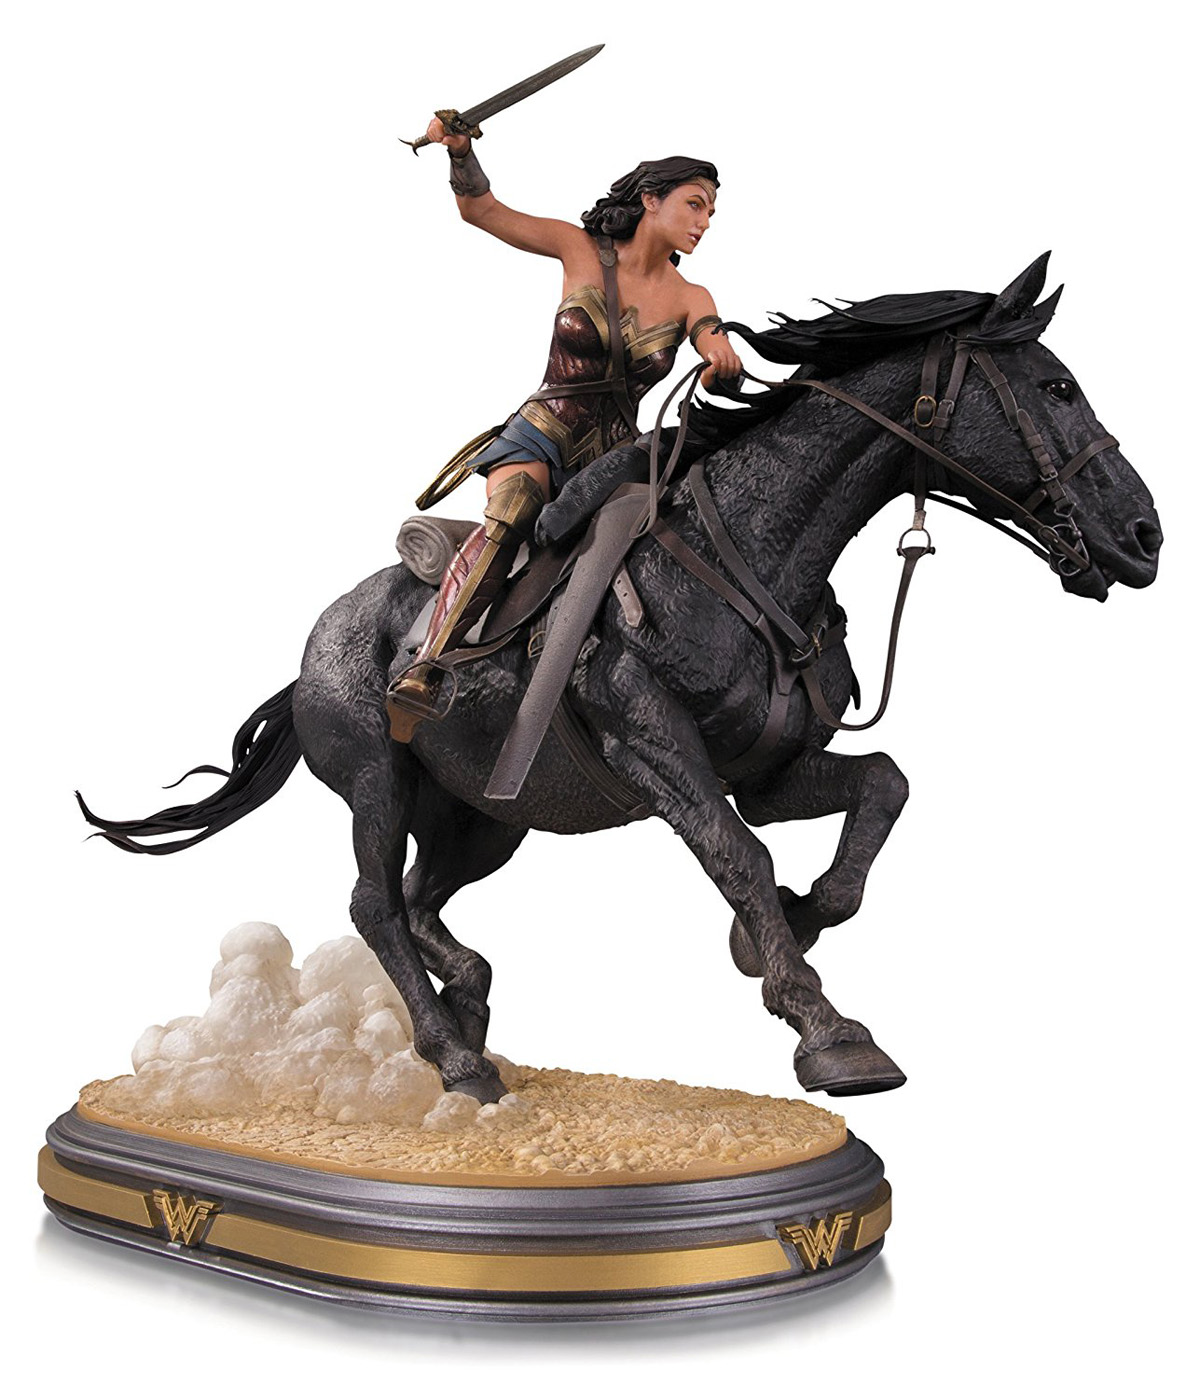 #15. Wonder Woman on Horseback from Wonder Woman